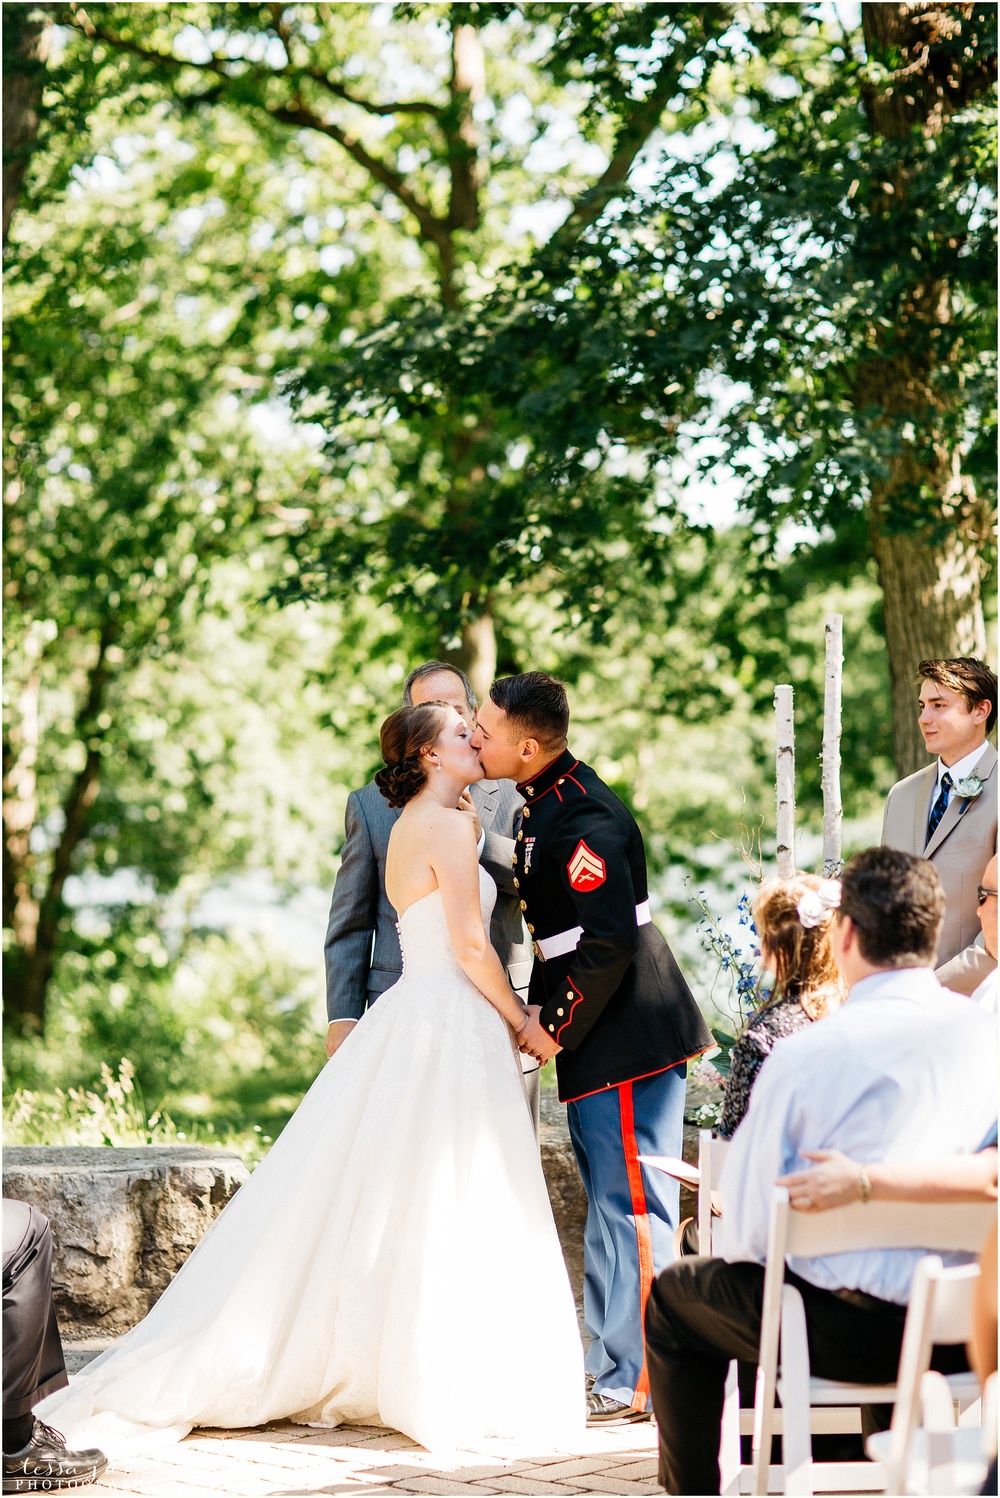 Samantha & Kyle // Silverwood Park, St. Anthony Wedding